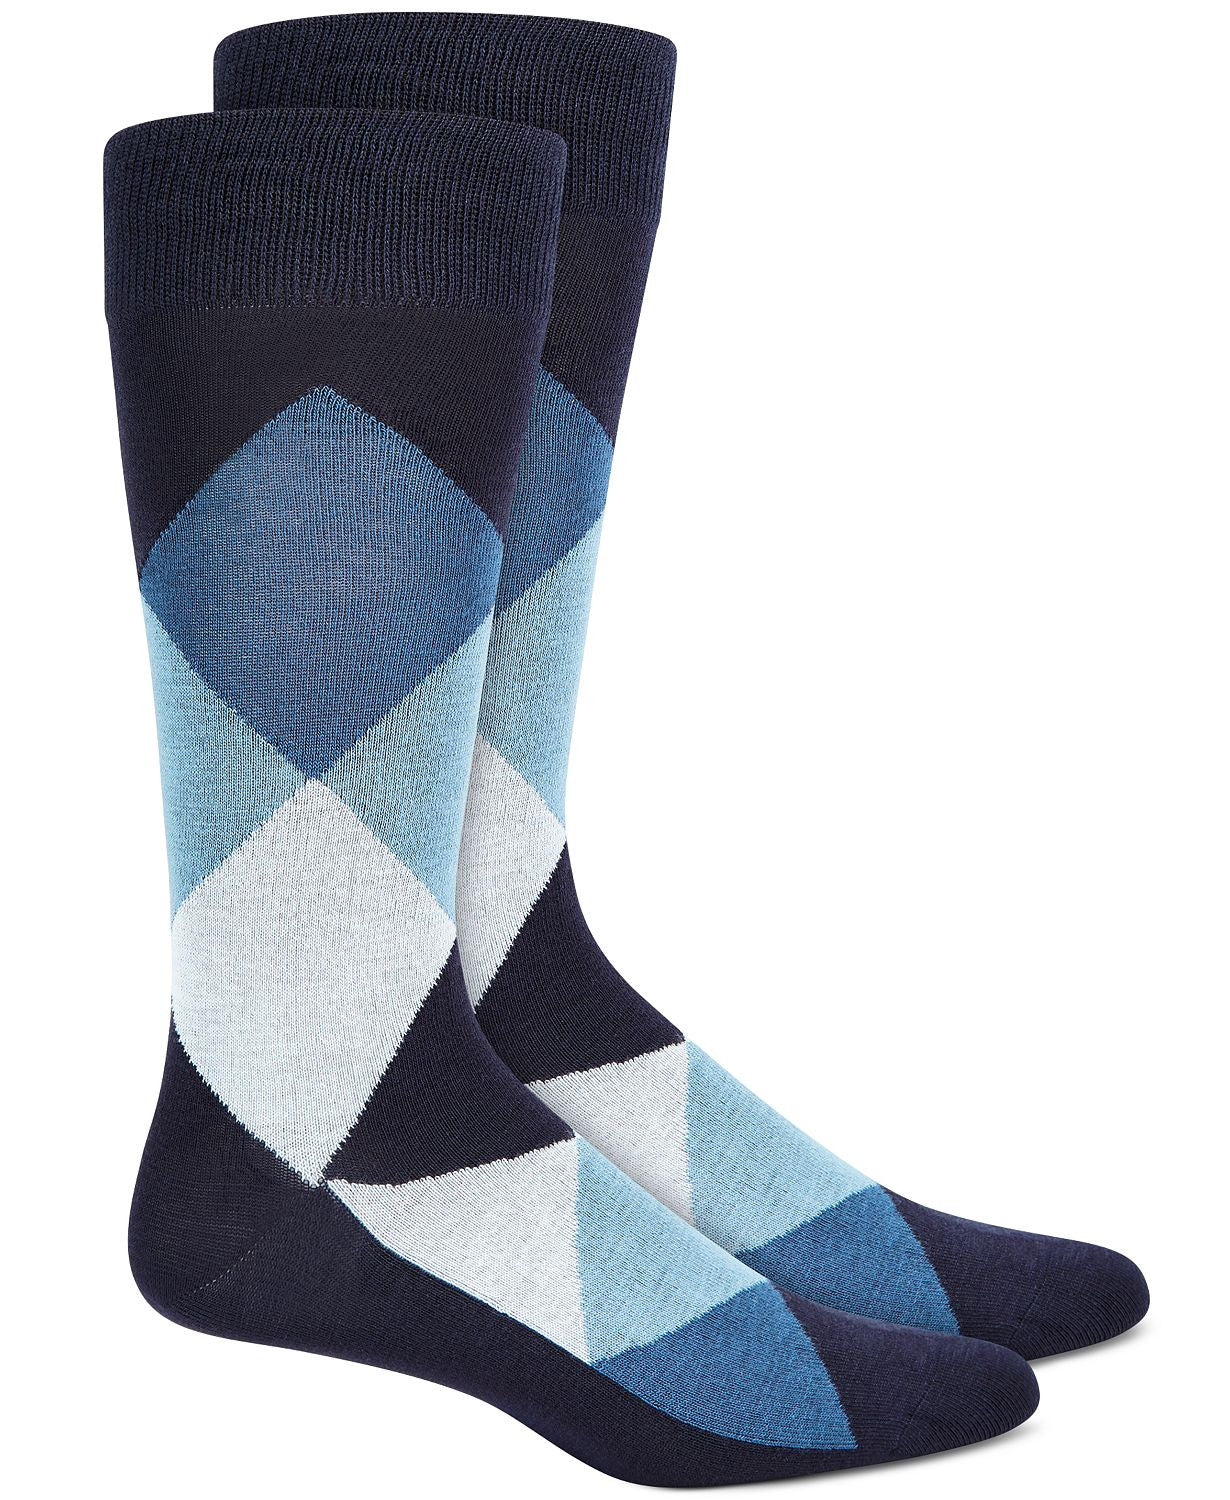 Alfani Argyle Socks Navy Blue